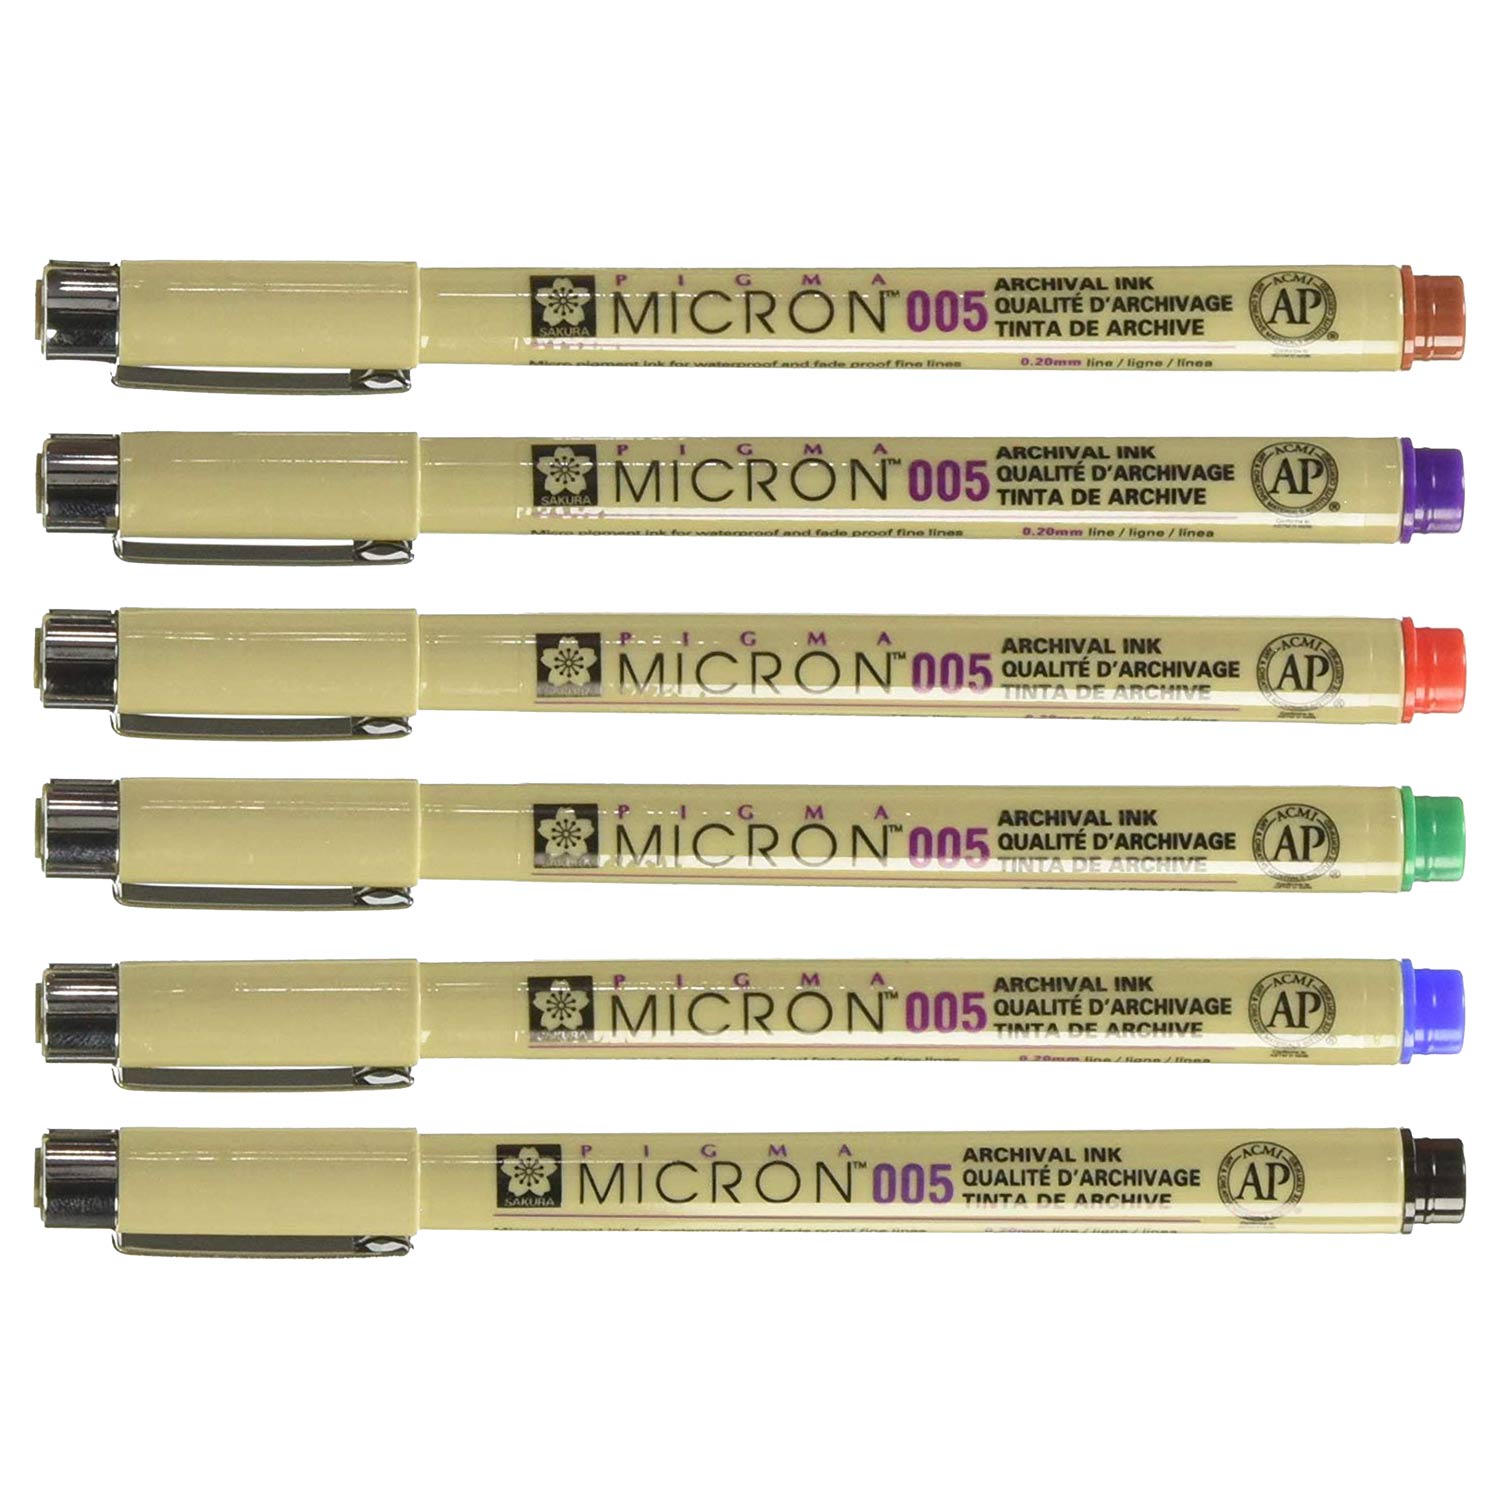 Sakura Pigma Micron Ultra-fine Colored Pen Set